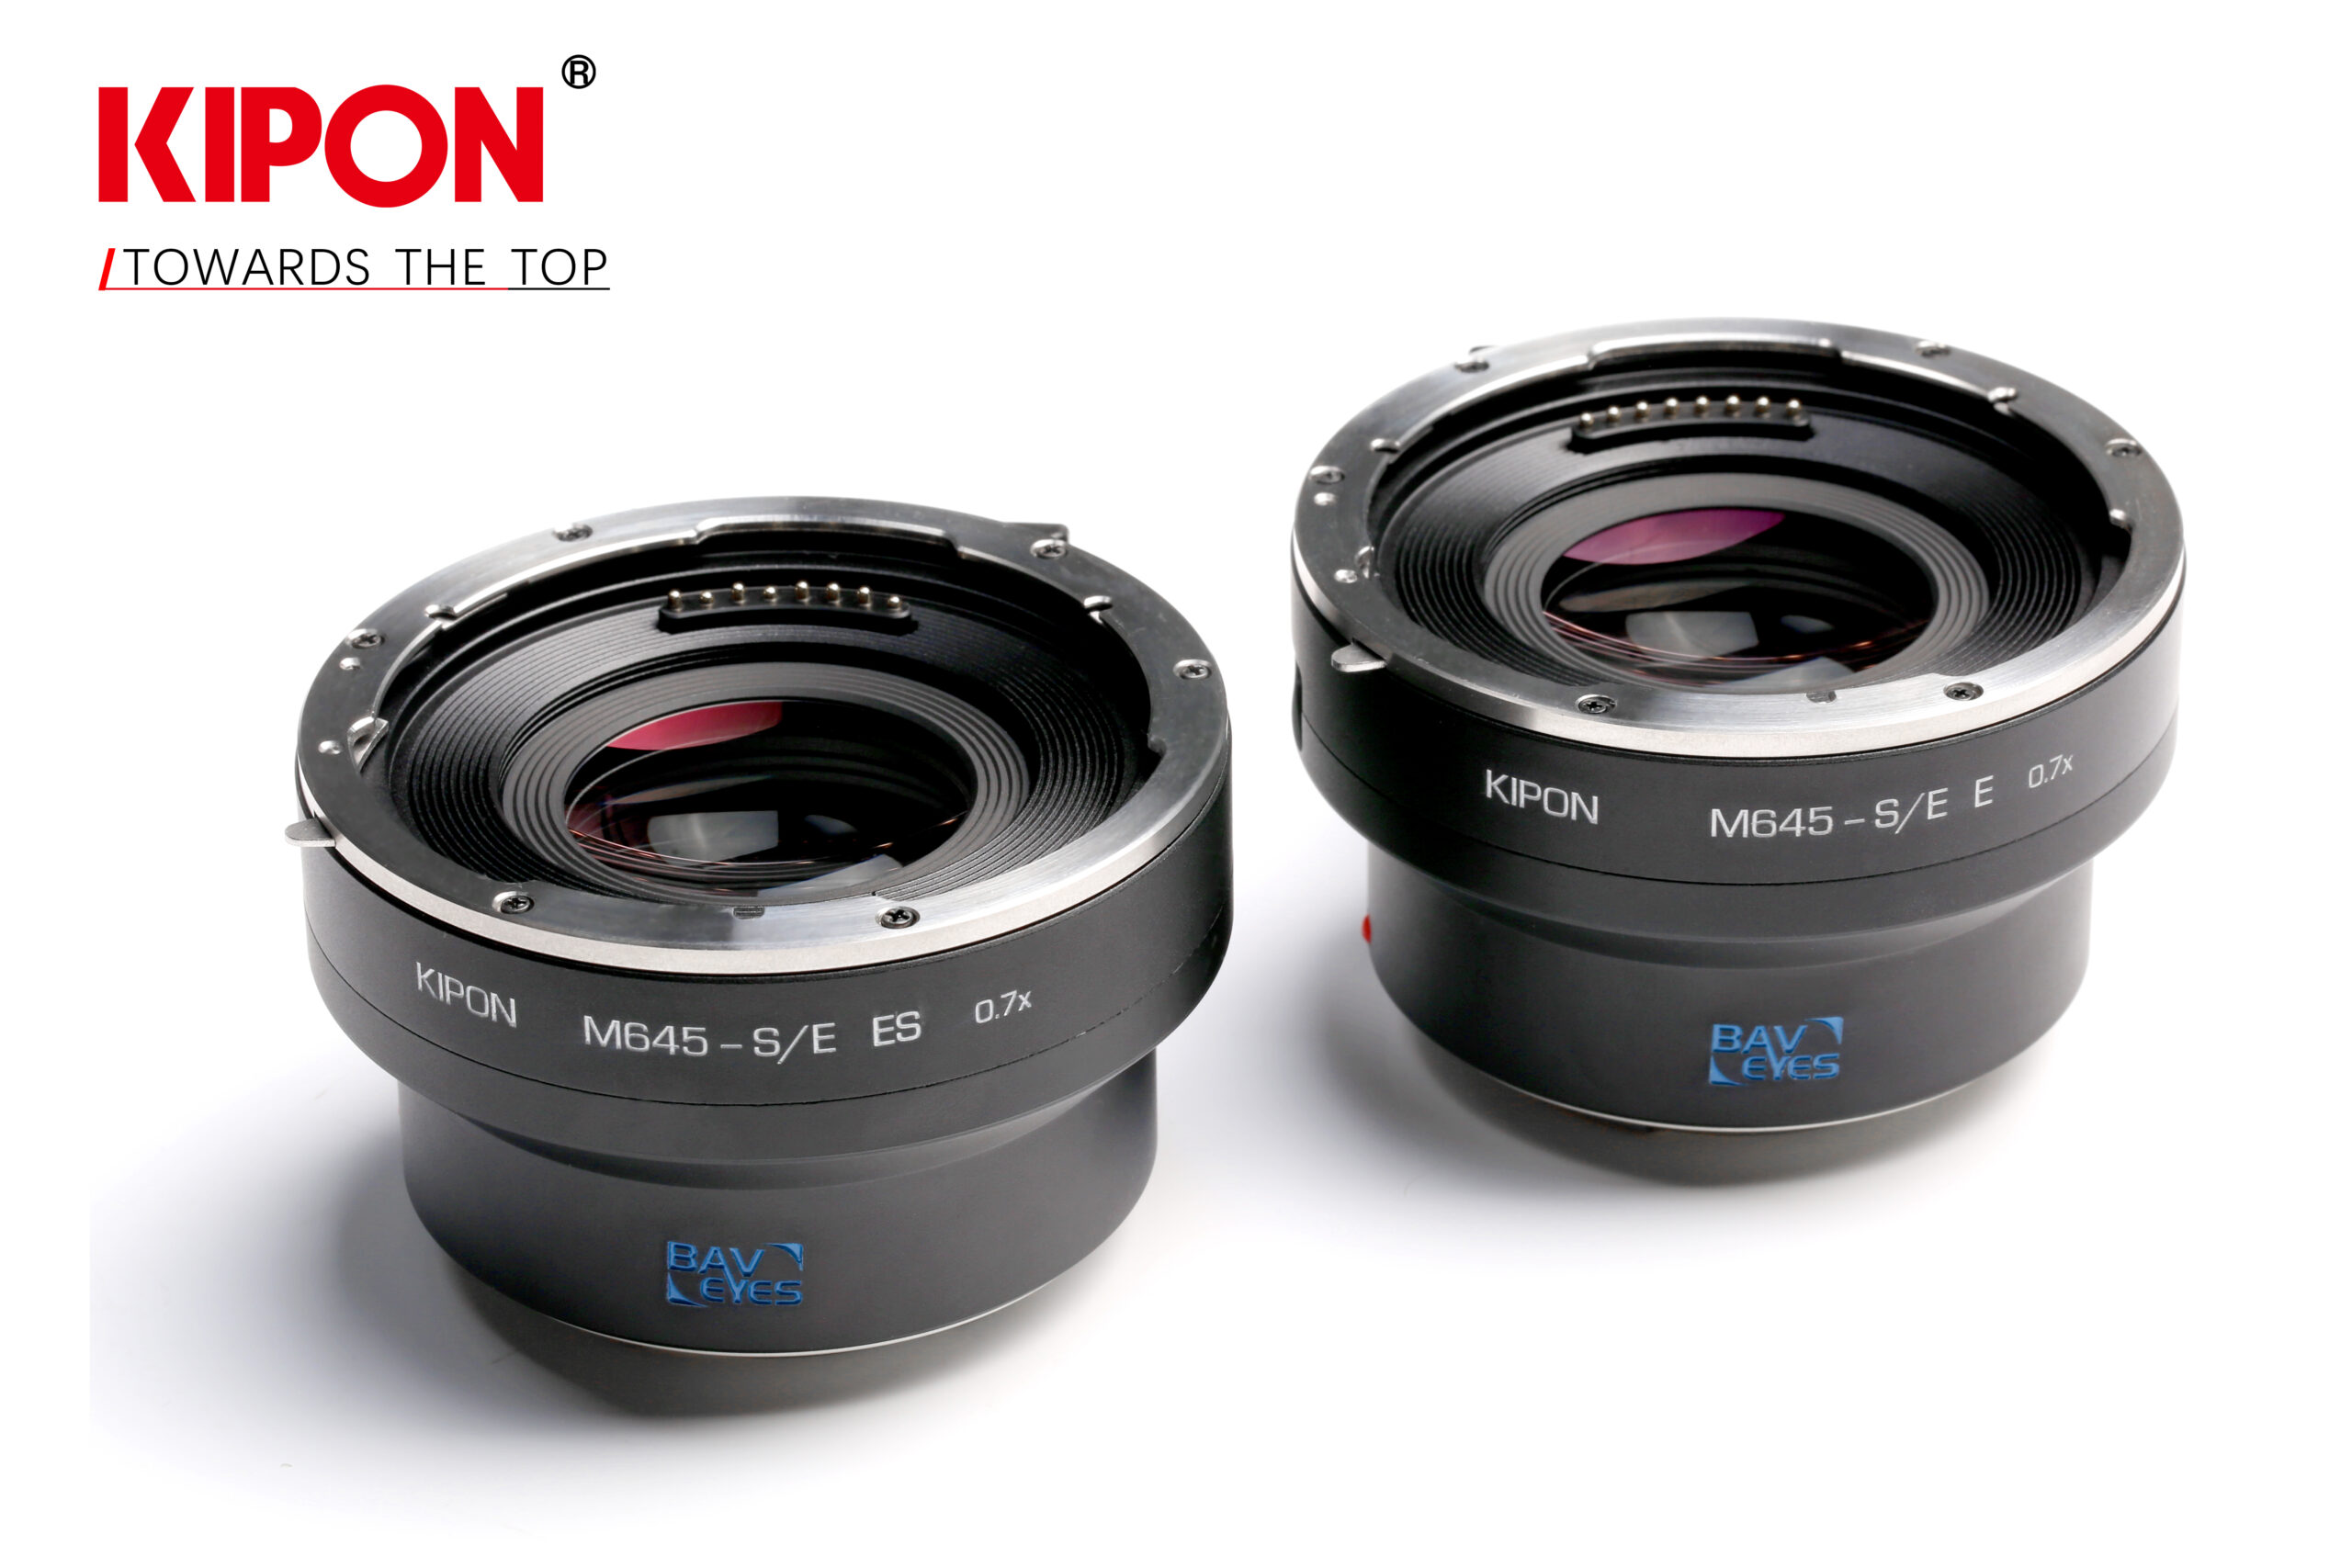 KIPON released two electronic focal reducers - KIPON